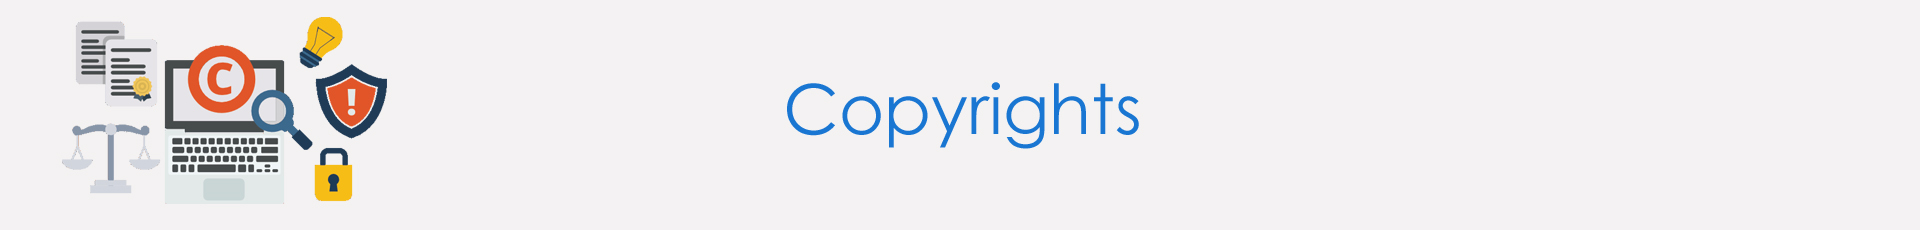 Copyrights-banner